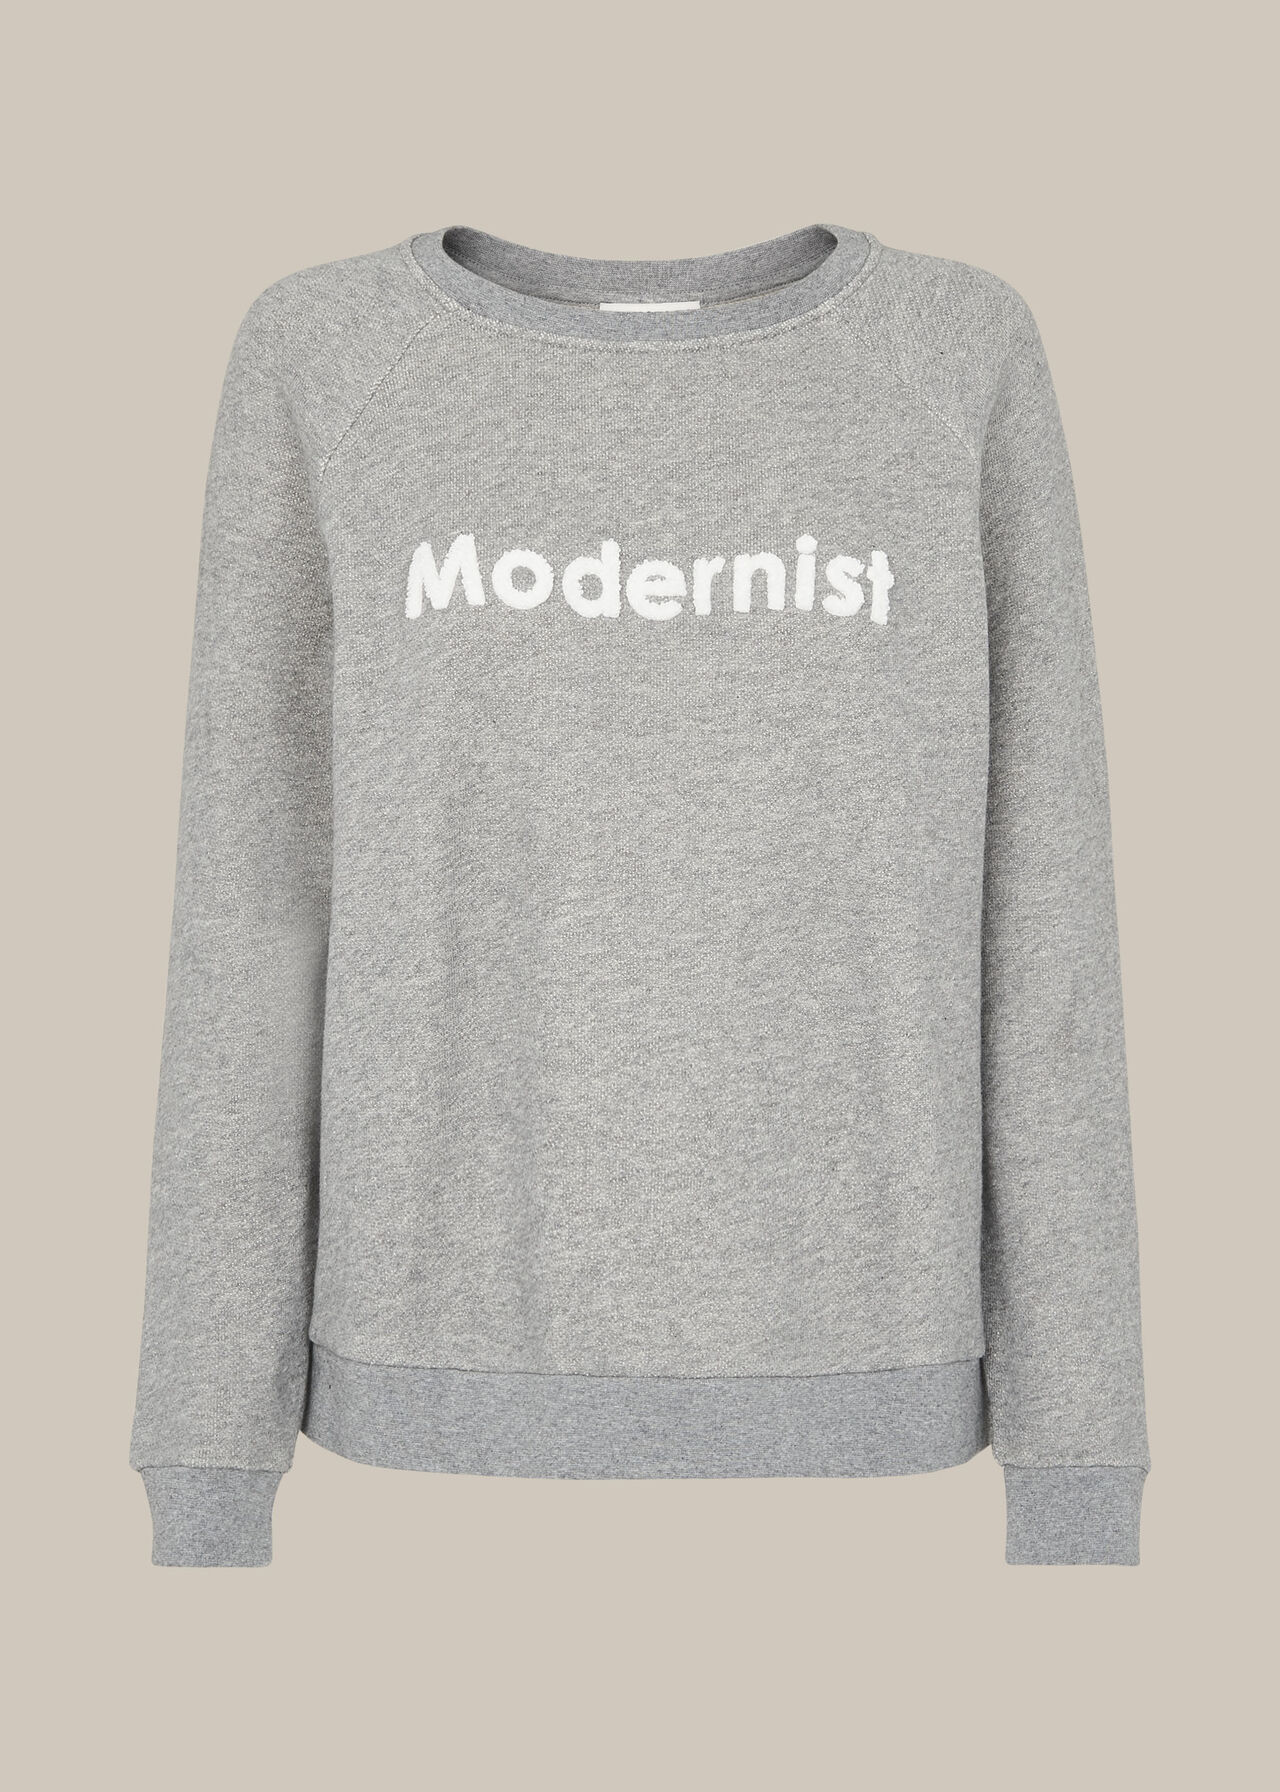 Modernist Logo Sweatshirt